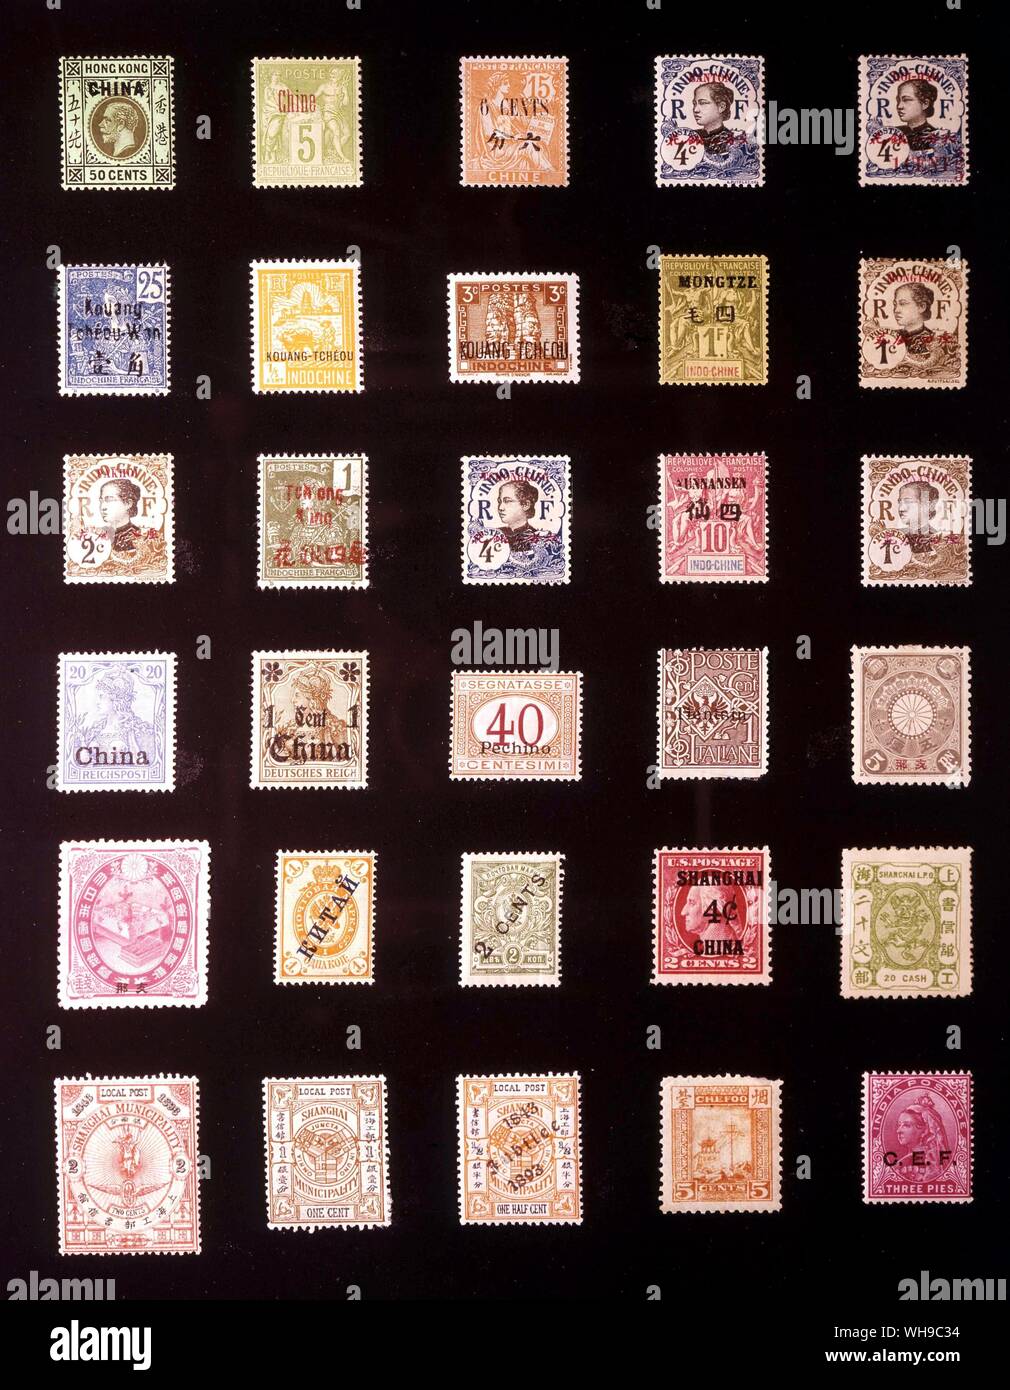 ASIA - ESTERA GLI UFFICI POSTALI IN CINA: (da sinistra a destra) 1. British Post uffici in Cina, 50 centesimi, 1917, 2. Uffici postali francesi in Cina, 5 centesimi, 1894, 3. Uffici postali francesi in Cina, 6 centesimi, 1915, 4. Il cantone, 4 centesimi, 1908, 5. Hoi-Hao, 1,6 centesimi, 1919, 6. Kouang-Tcheou-Wan, 25 centesimi, 1906 7. Kouang-Tcheou, 0,2 cent, 1927, 8. Kouang-Tcheou, 3 centesimi, 1941, 9. Mongtze, 1 franco, 1903, 10. Mong-Tseu, 1 centesimo, 1908, 11. Pakhoi, 2 centesimi, 1908, 12. Tchongking, 1 centesimo, 1906 13. Tchongking, 4 centesimi, 1908, 14. Yunnansen, 10 centesimi, 1903, 15. Yunnan-Fou, 1 centesimo, 1908, 16. Tedesco Foto Stock